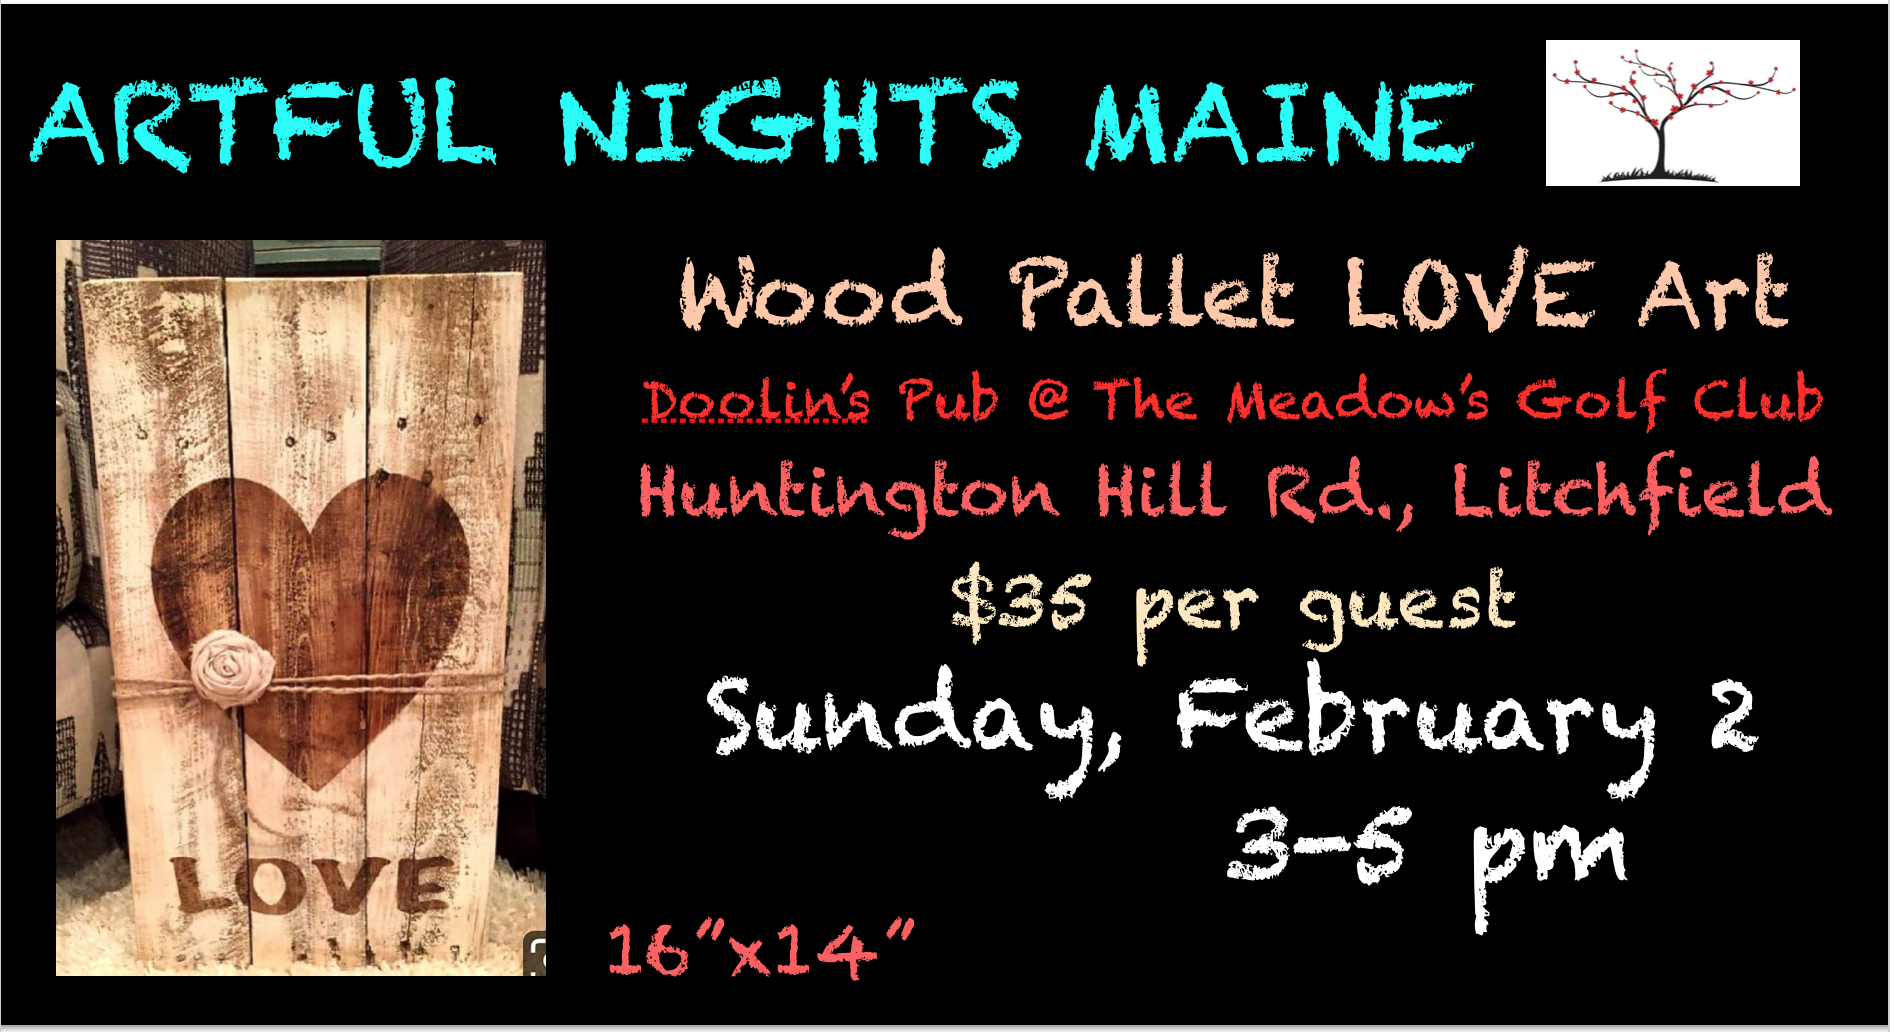 Wood Pallet Love Art at Doolin's Pub at The Meadow's Golf Club, Litchfield